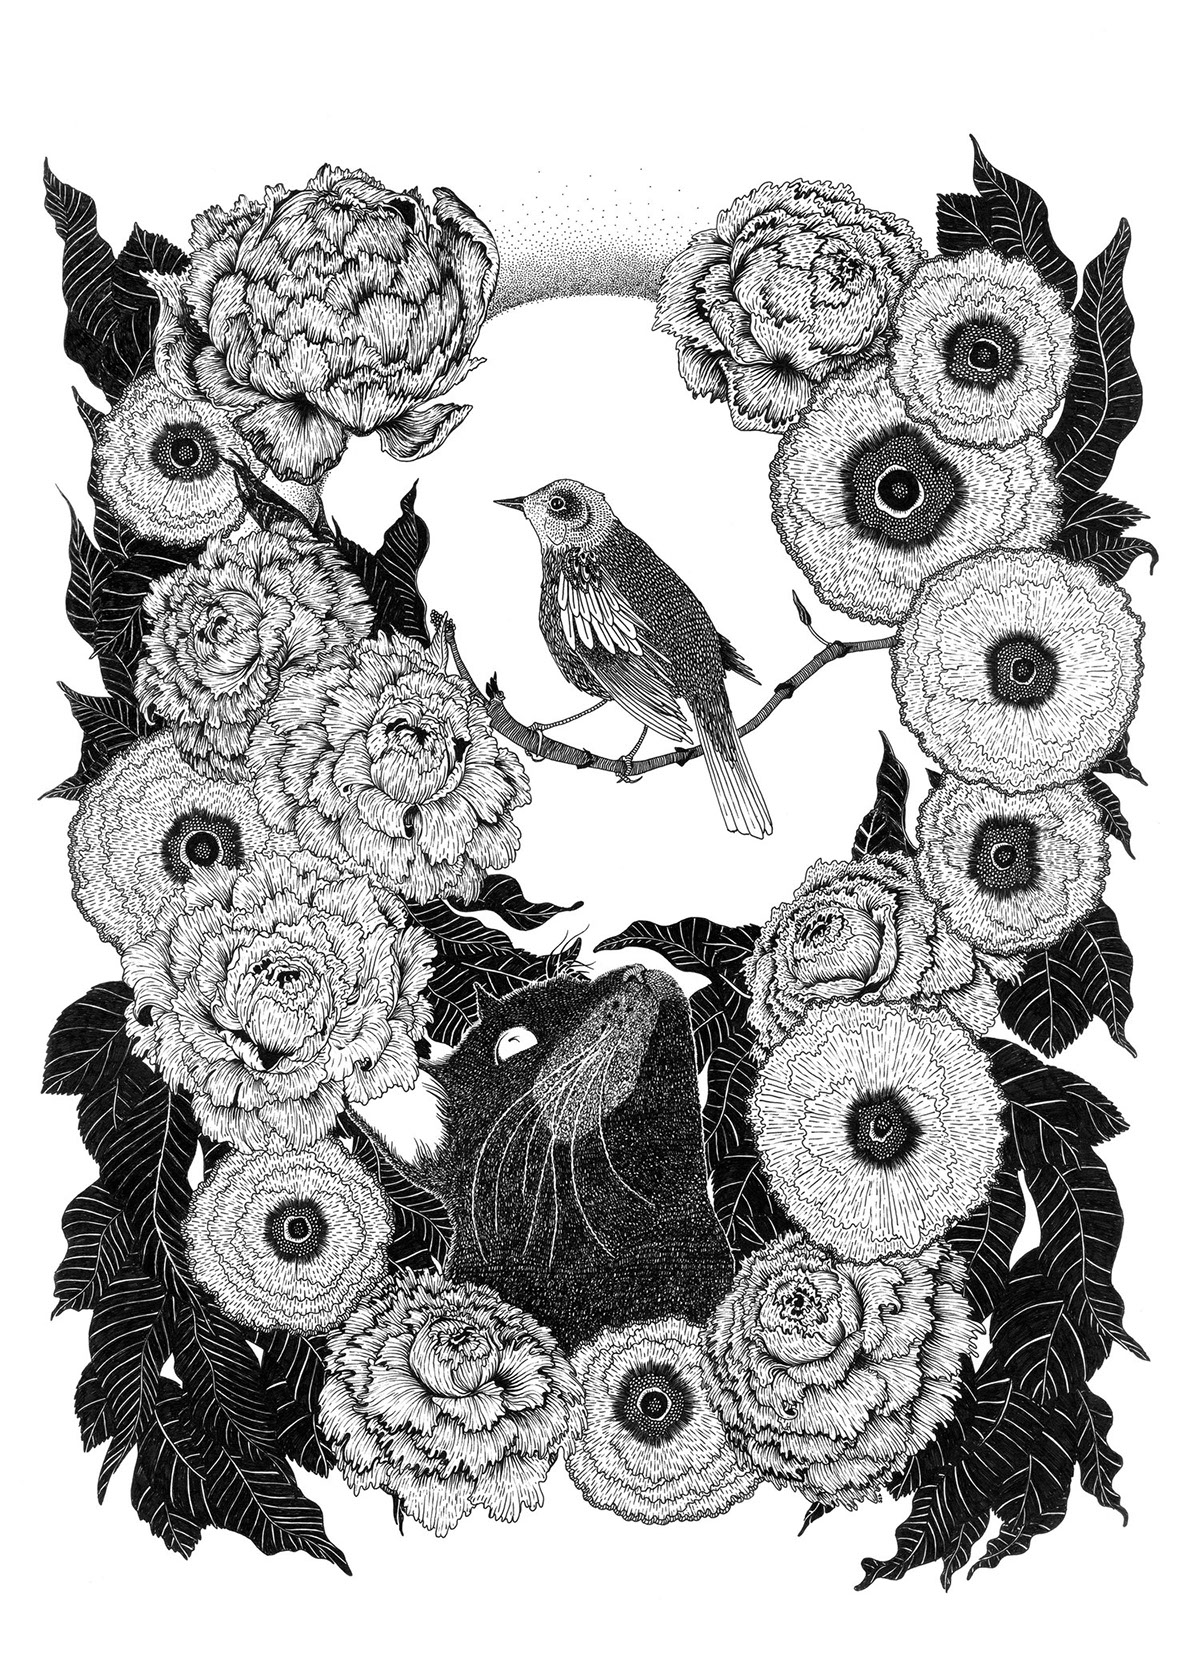 Cat bird pen detailed Flowers romance black and white texture selfportrait art